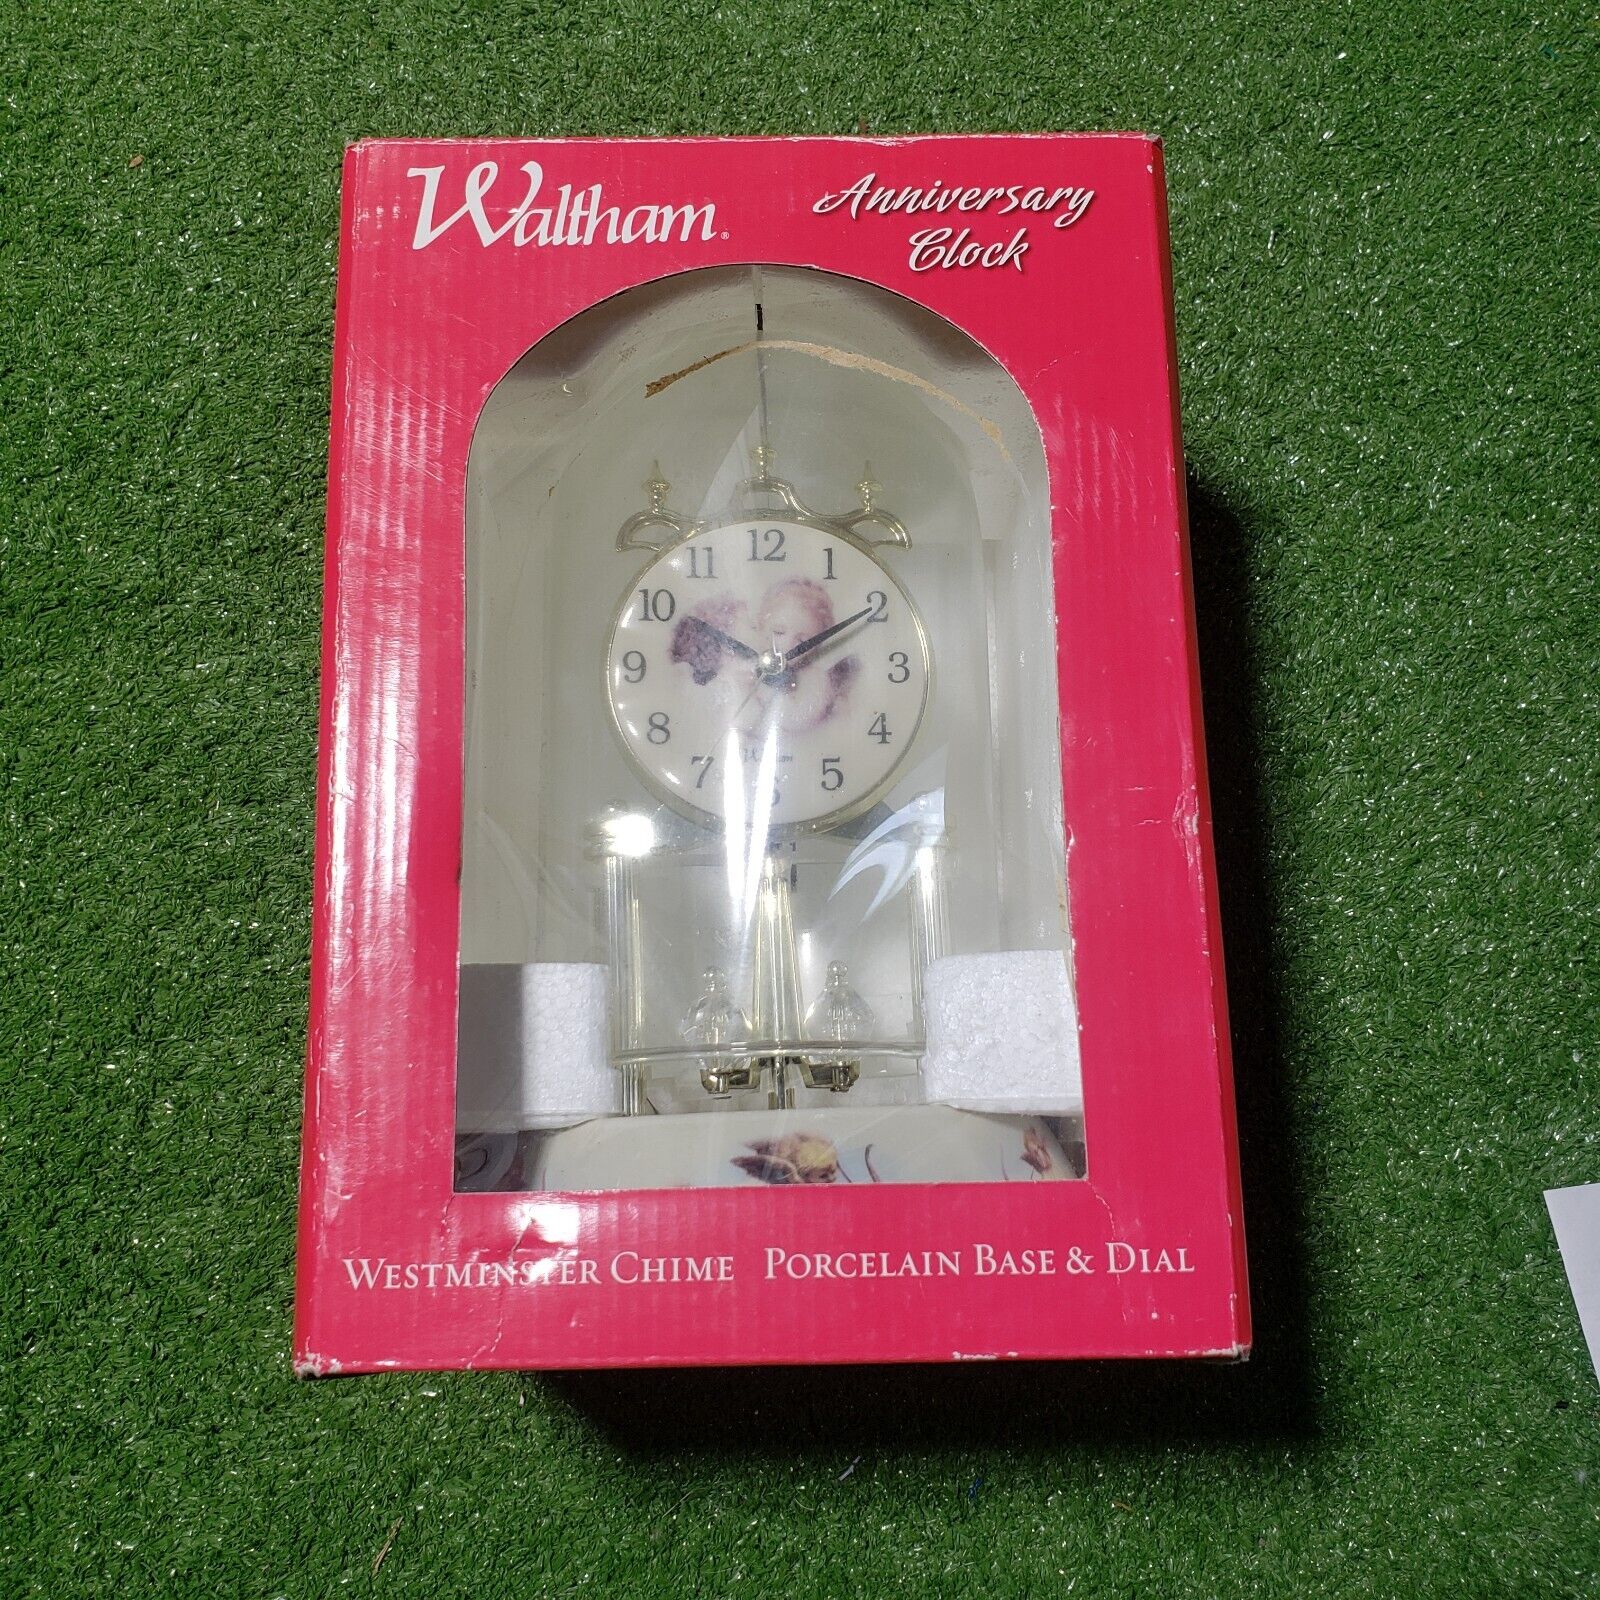 Waltham Anniversary Clock Cherub Angels In A Glass Dome- Porcelain Base & Dial